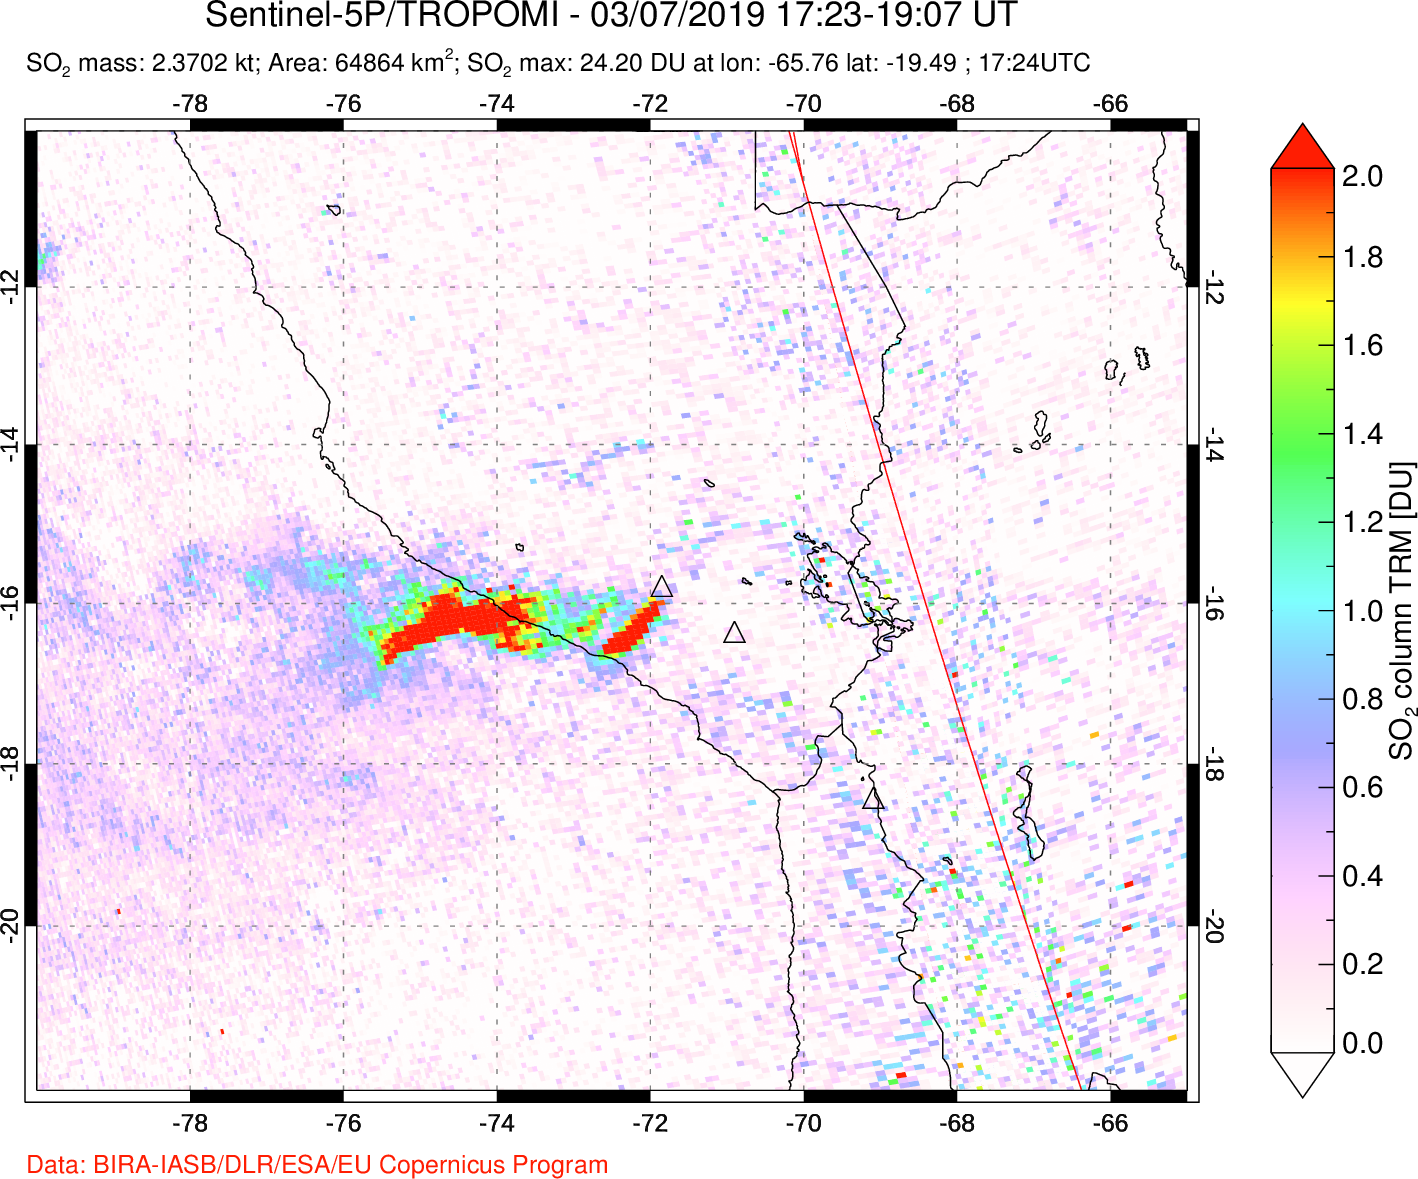 A sulfur dioxide image over Peru on Mar 07, 2019.